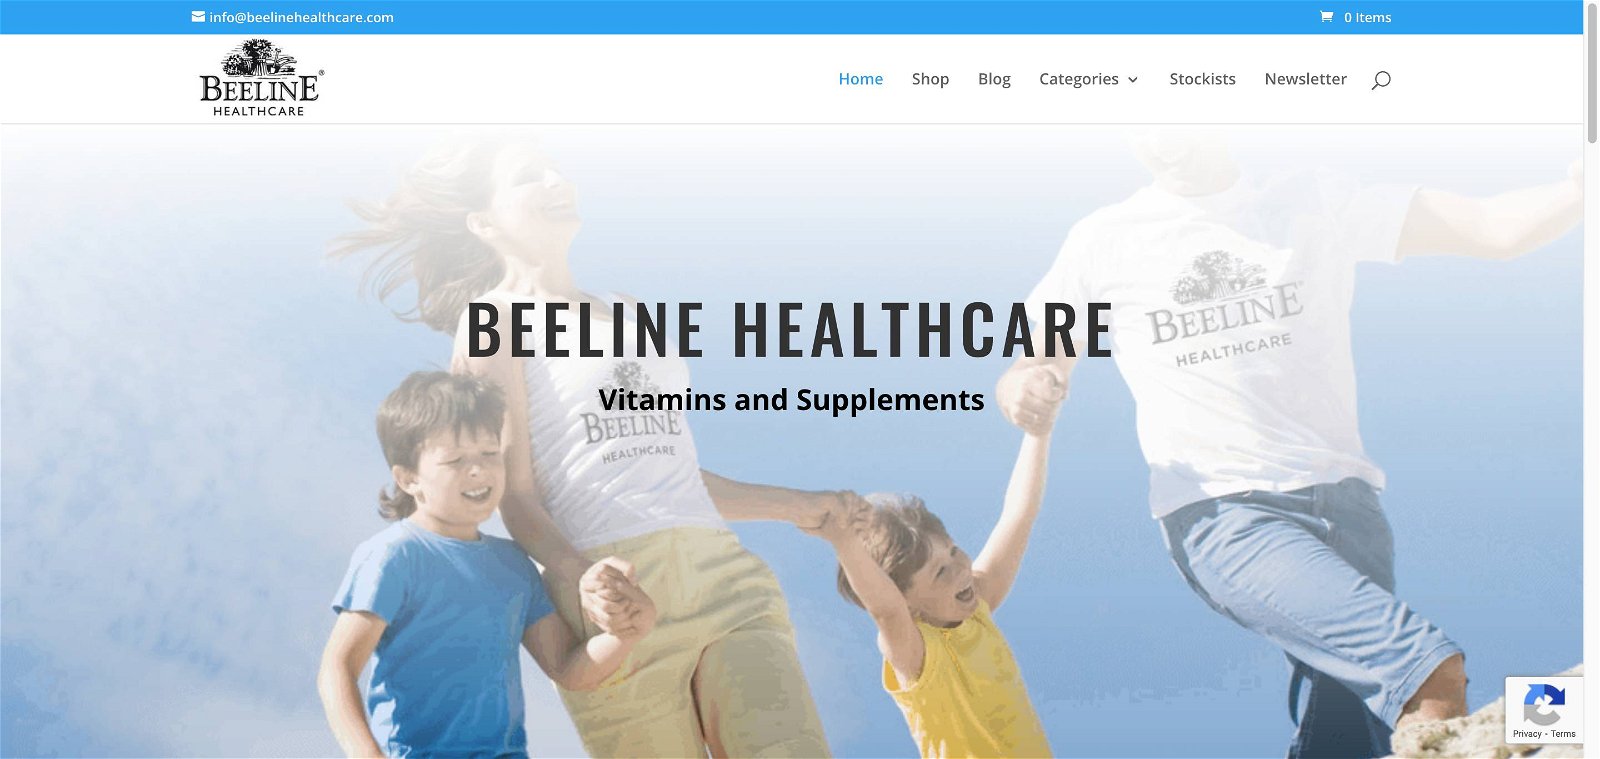 Beeline healthcare.com